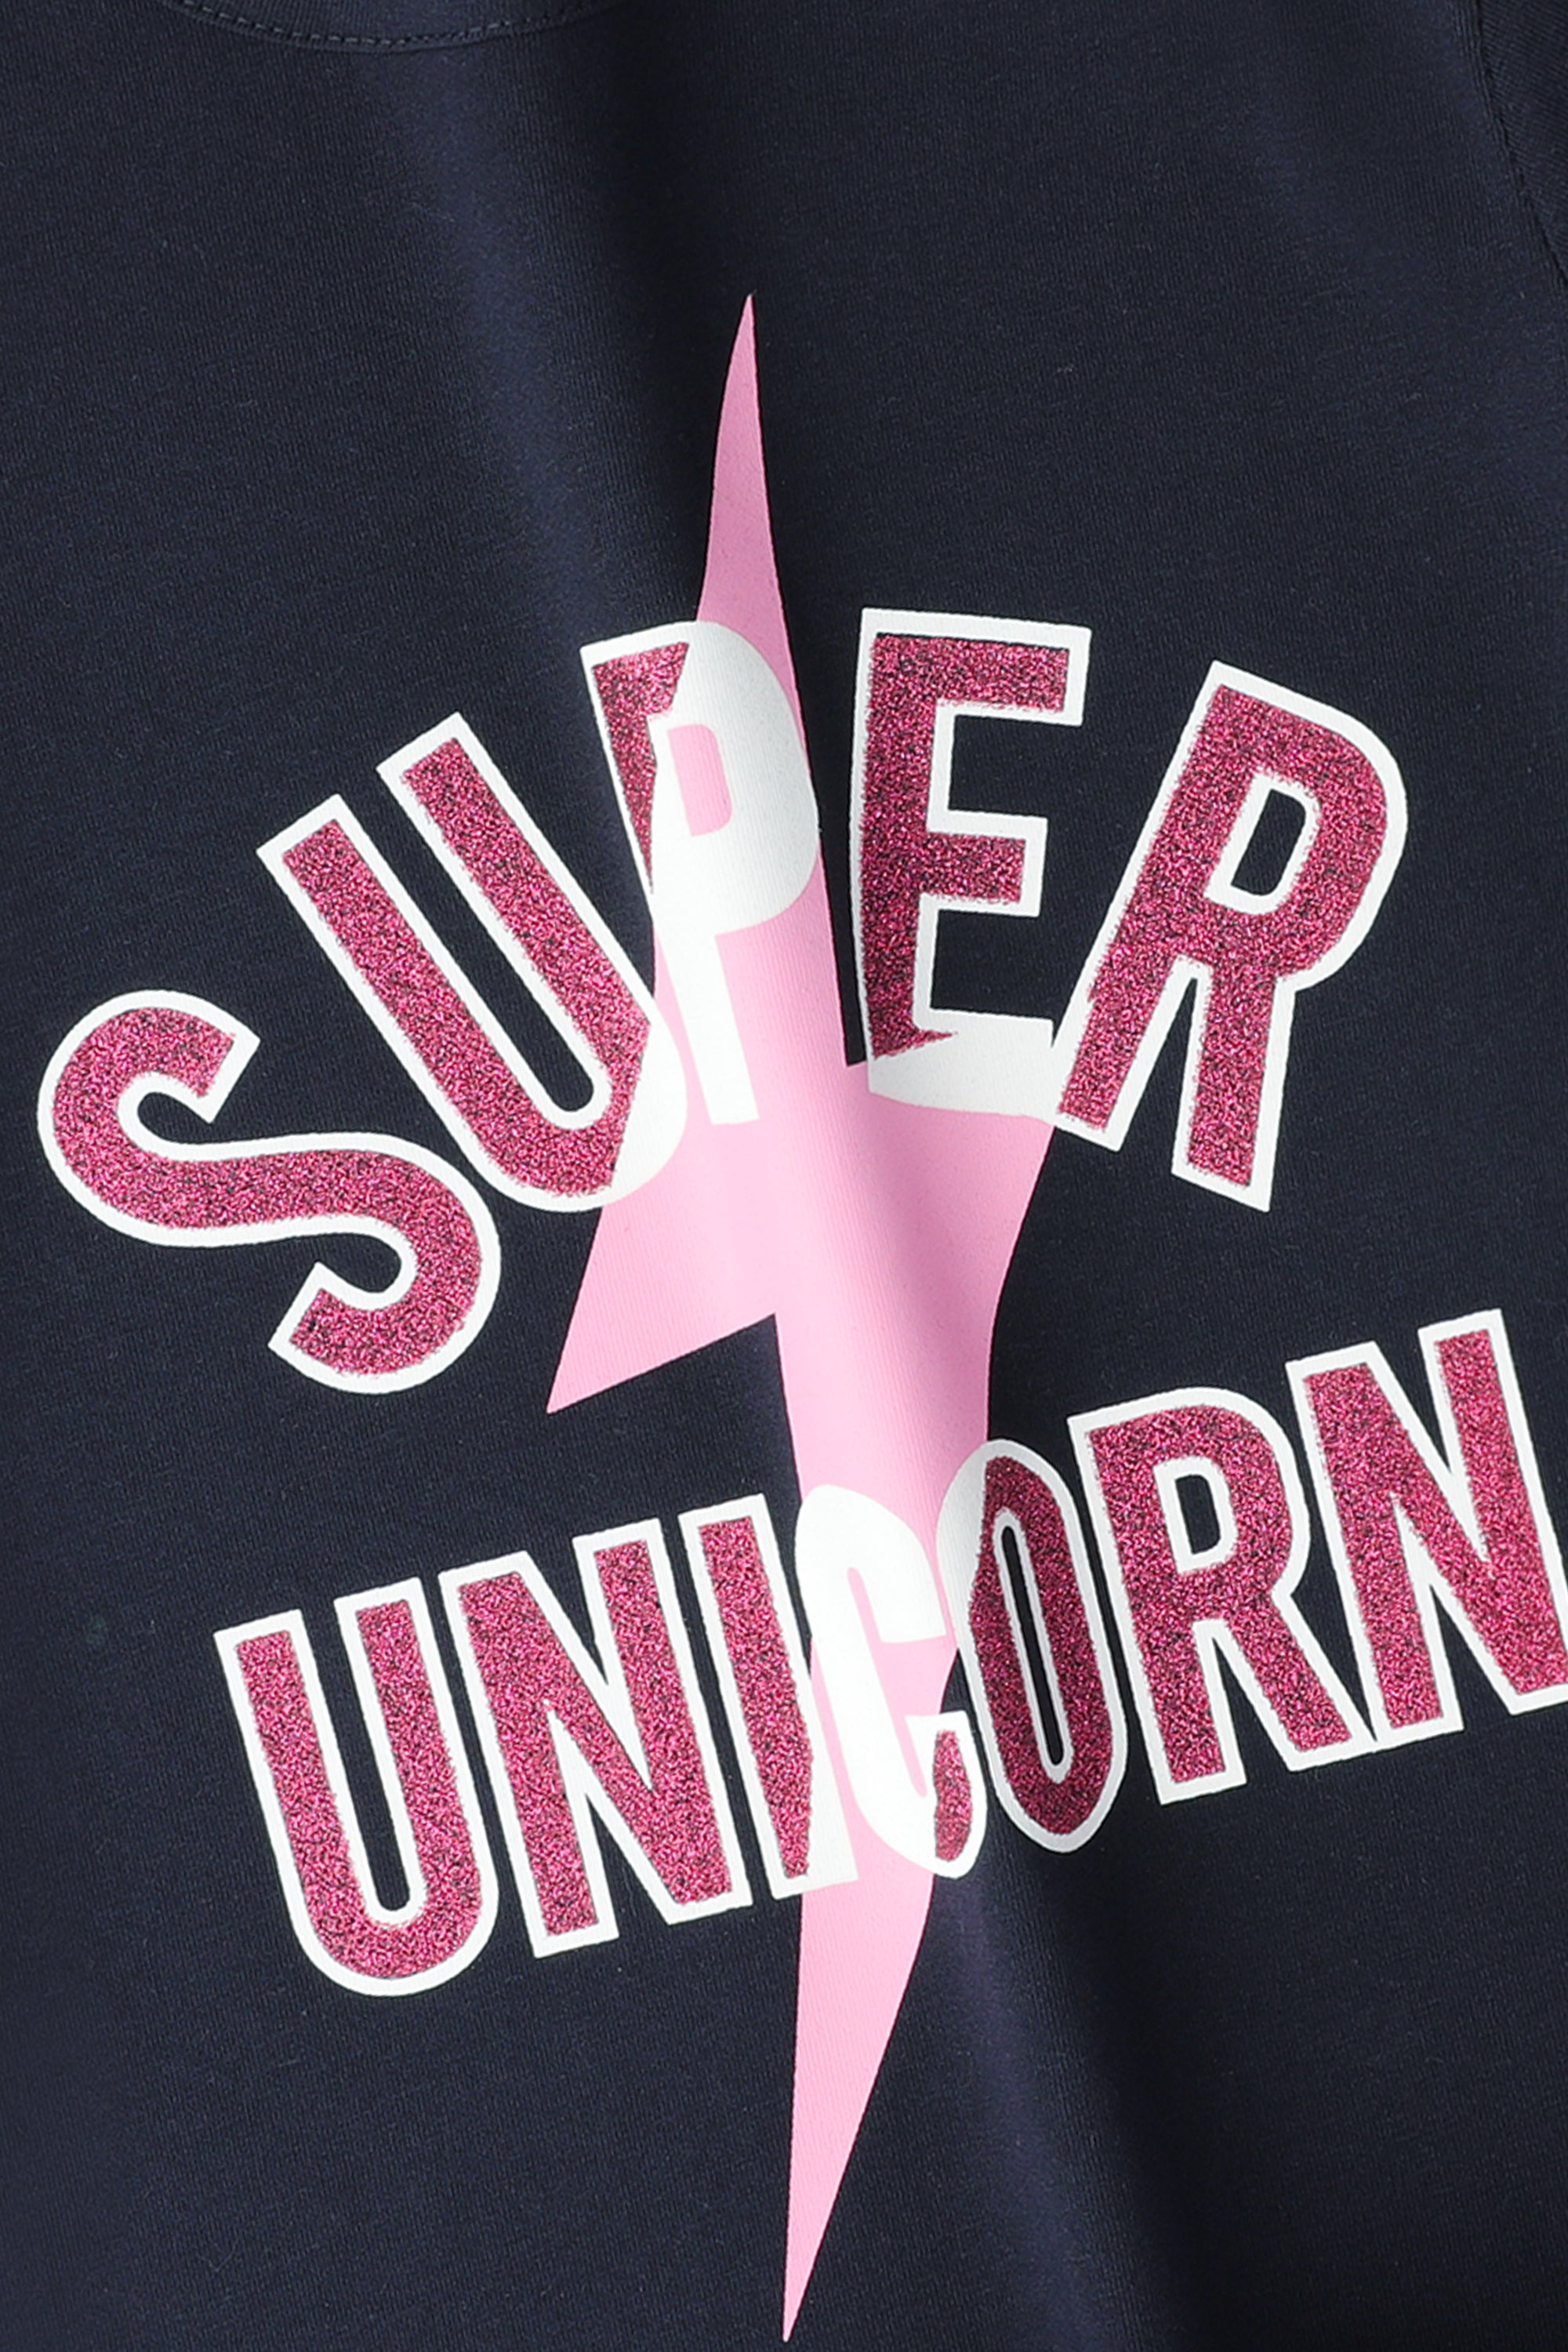 Girls Navy Blue Unicorn T-shirt